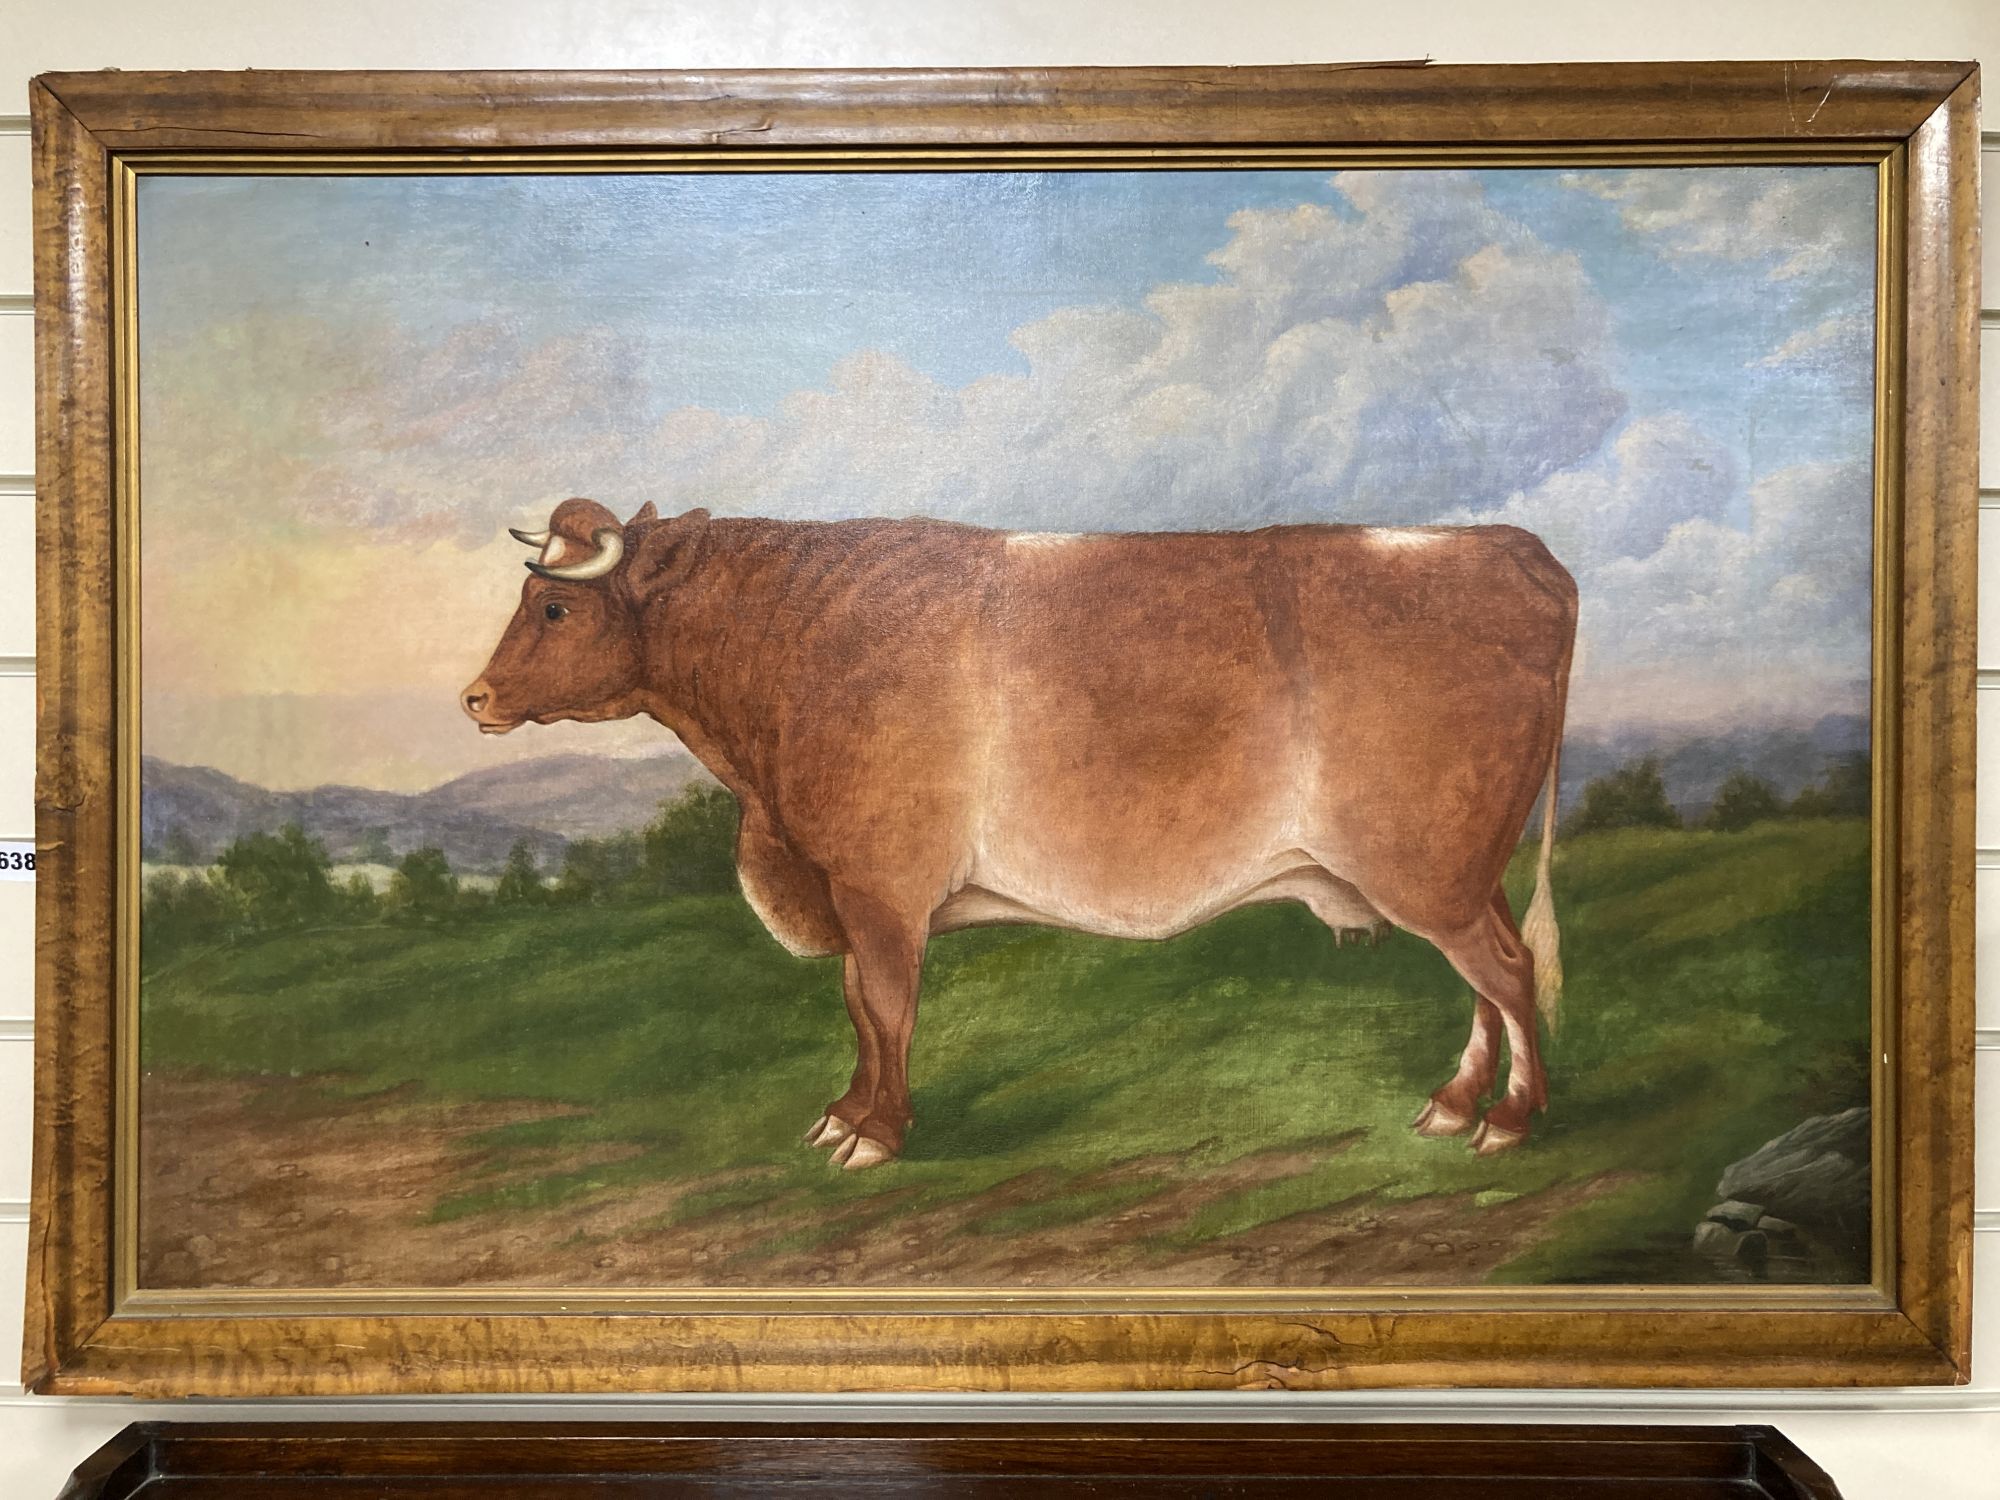 19th century English School, oil on canvas, Cow in a landscape, 60 x 92.5cm